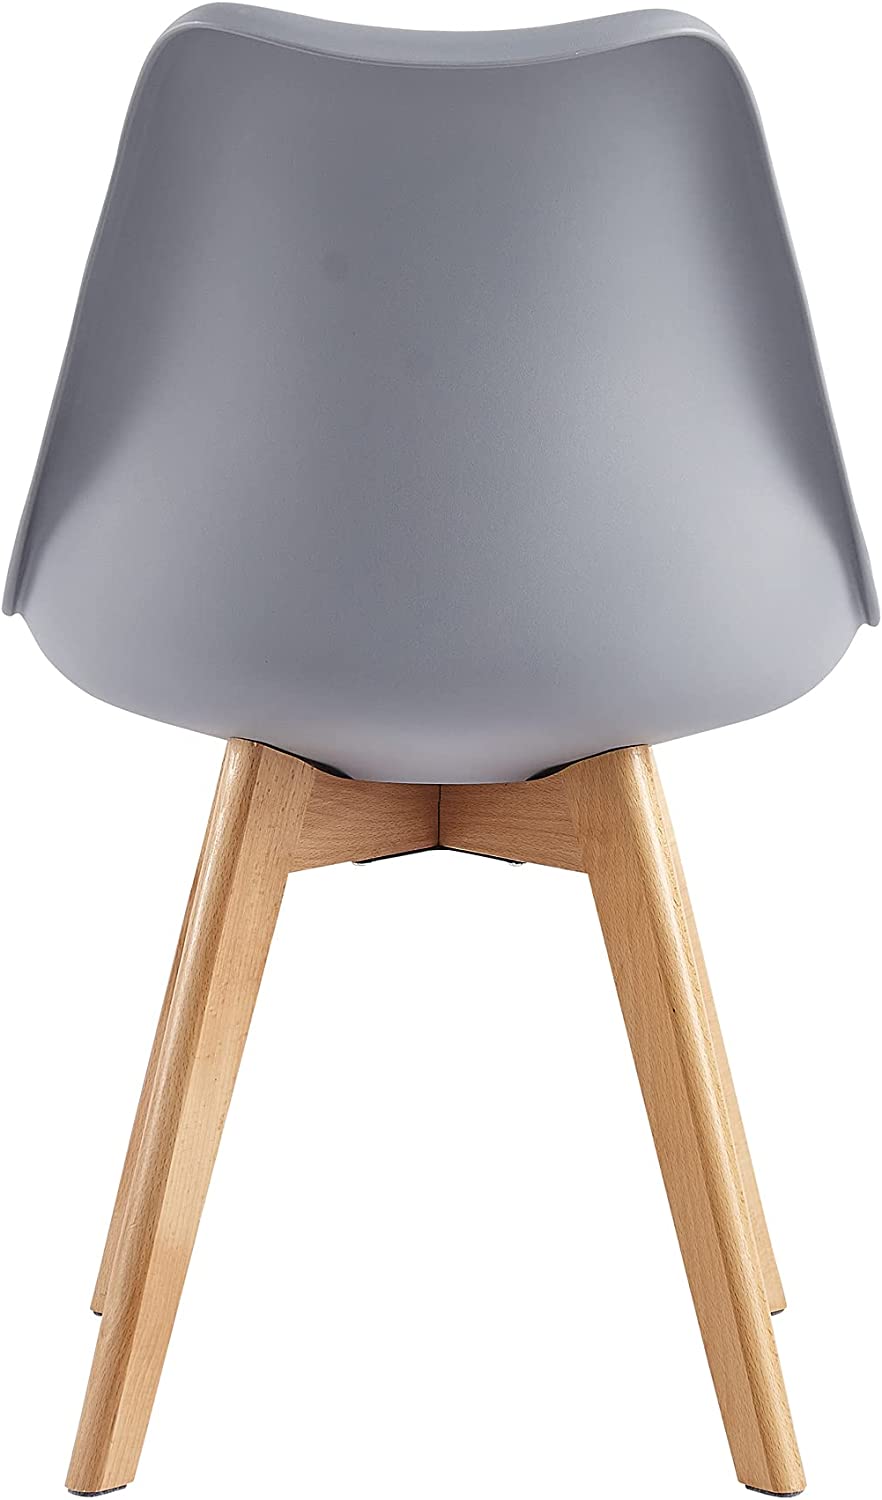 Distinct Designs Classic Mid-Century Design Dining Office Chair in durable Gray PP Plastic-Distinct Designs (London) Ltd